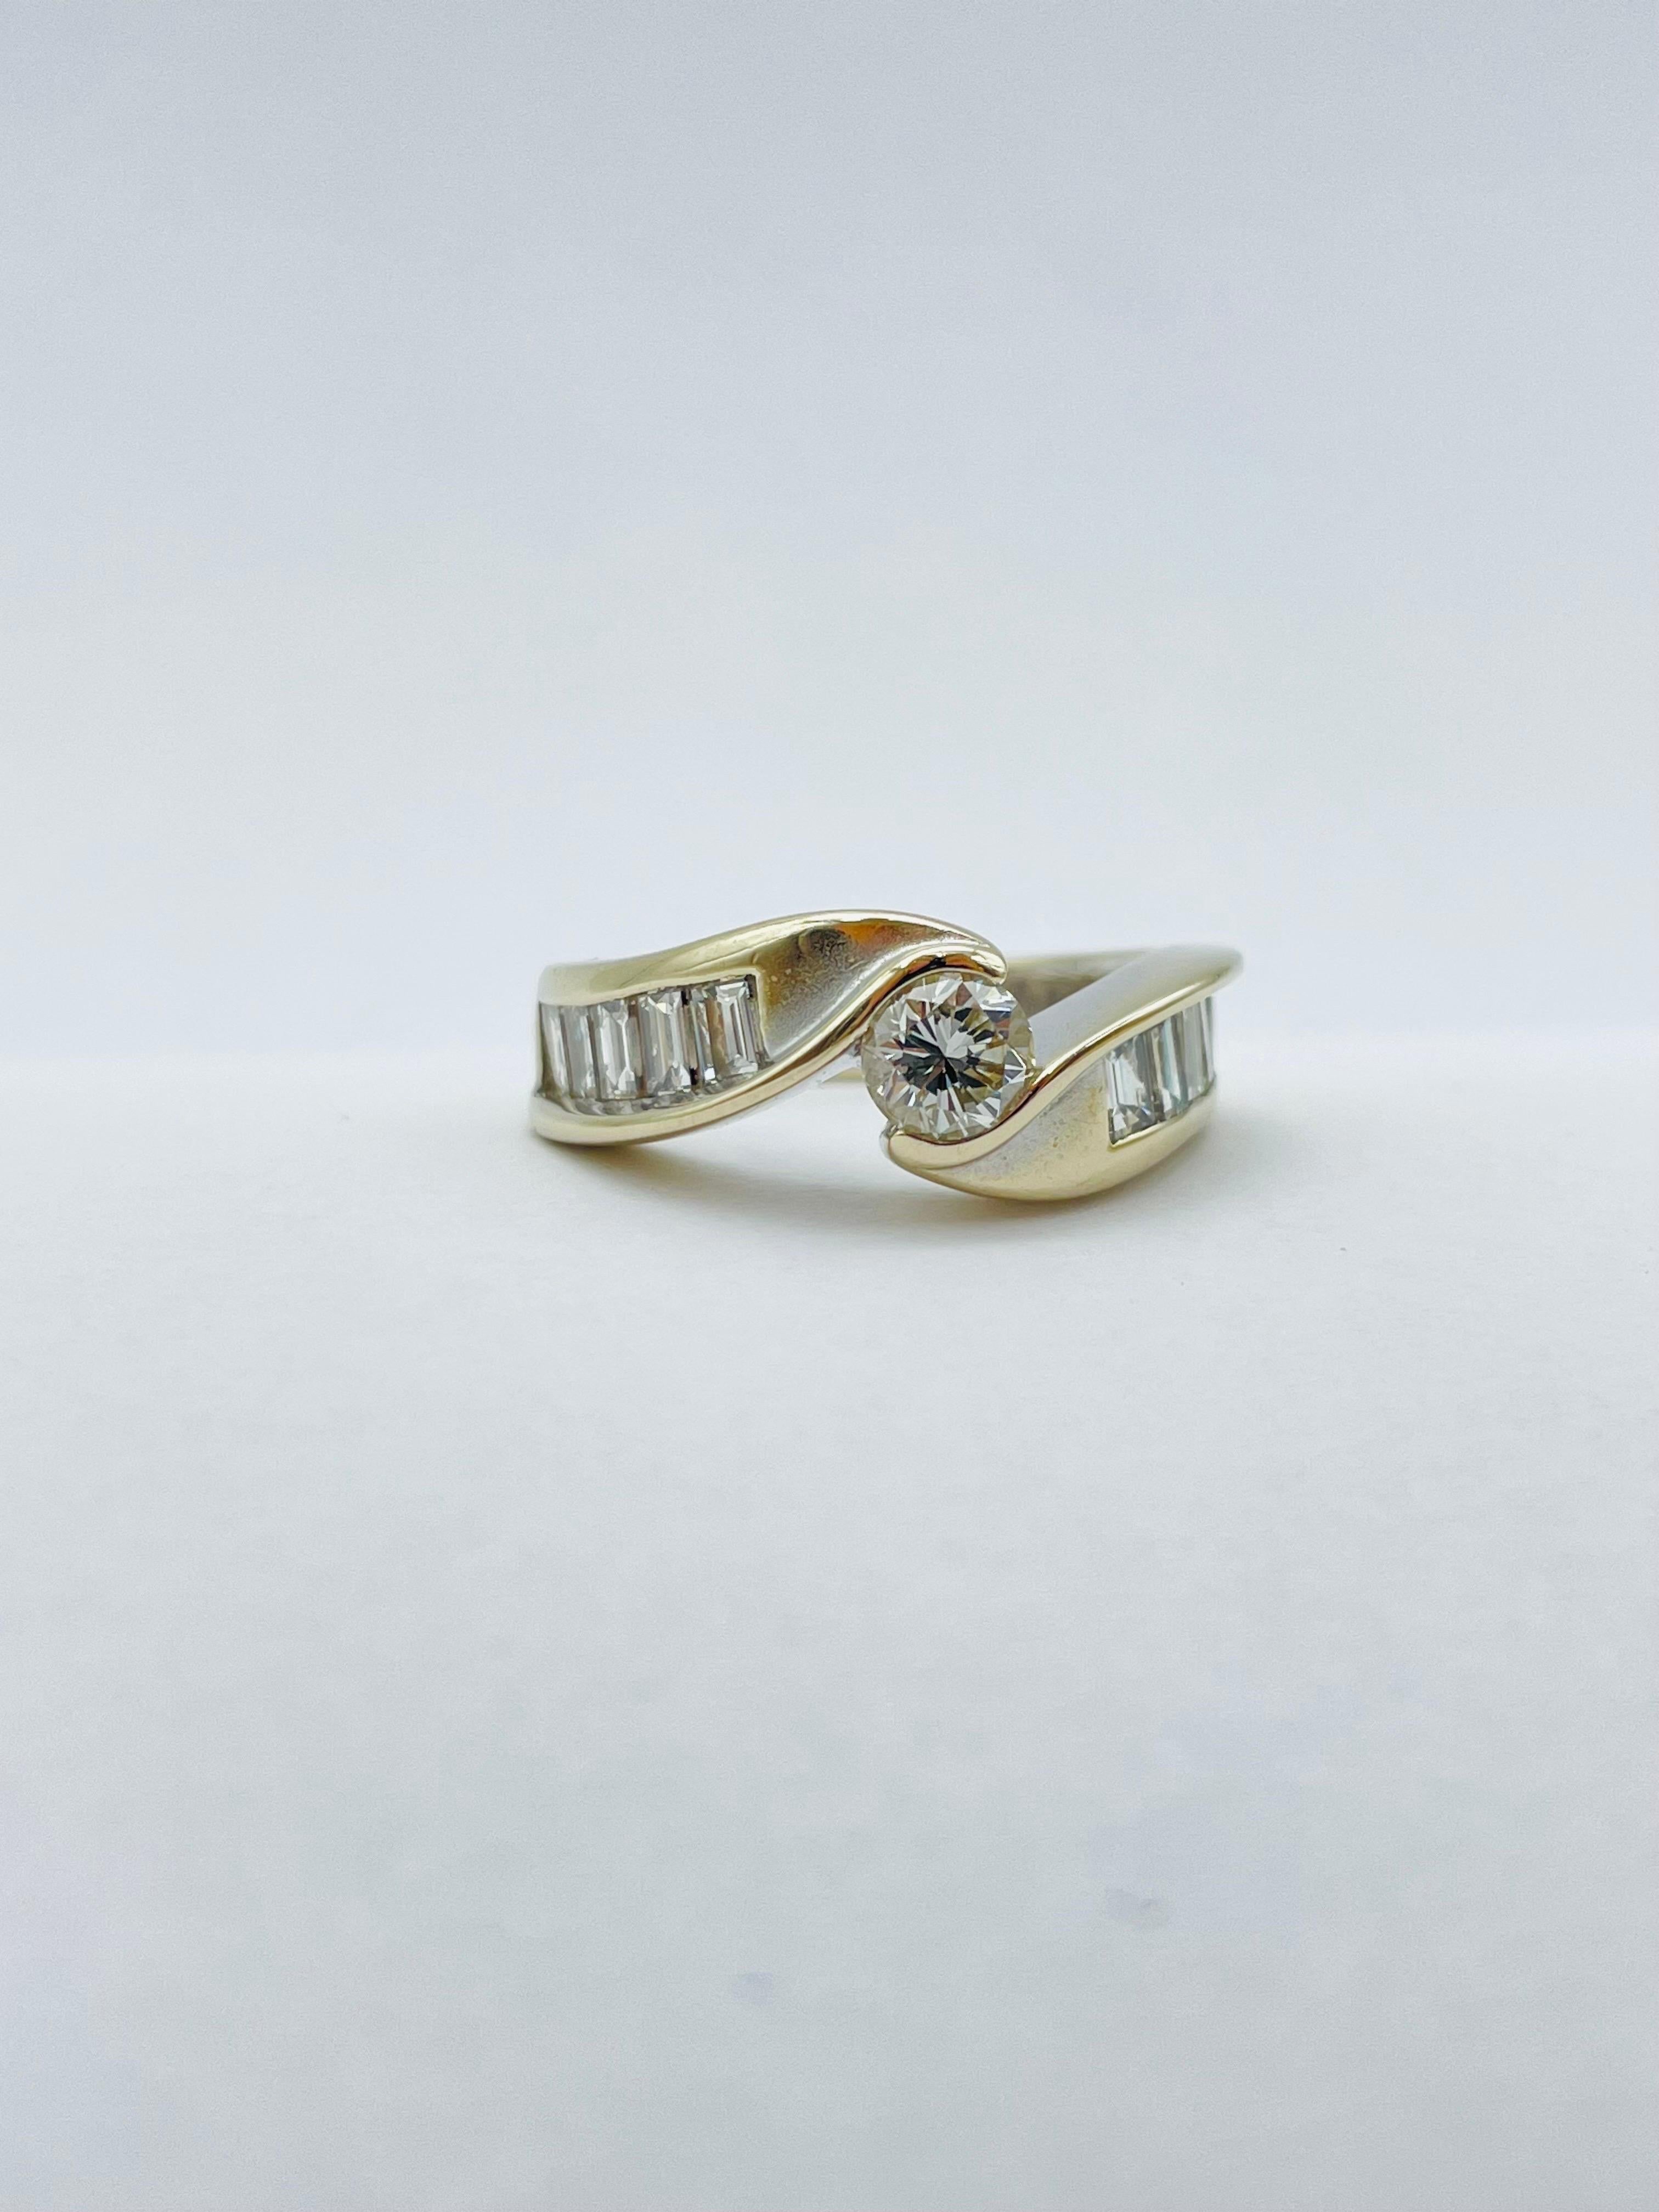 Brilliant Cut Unique 18k Gold Ring, 0.50 Carat Diamond and 8 Baguette, White/Yellow Gold For Sale